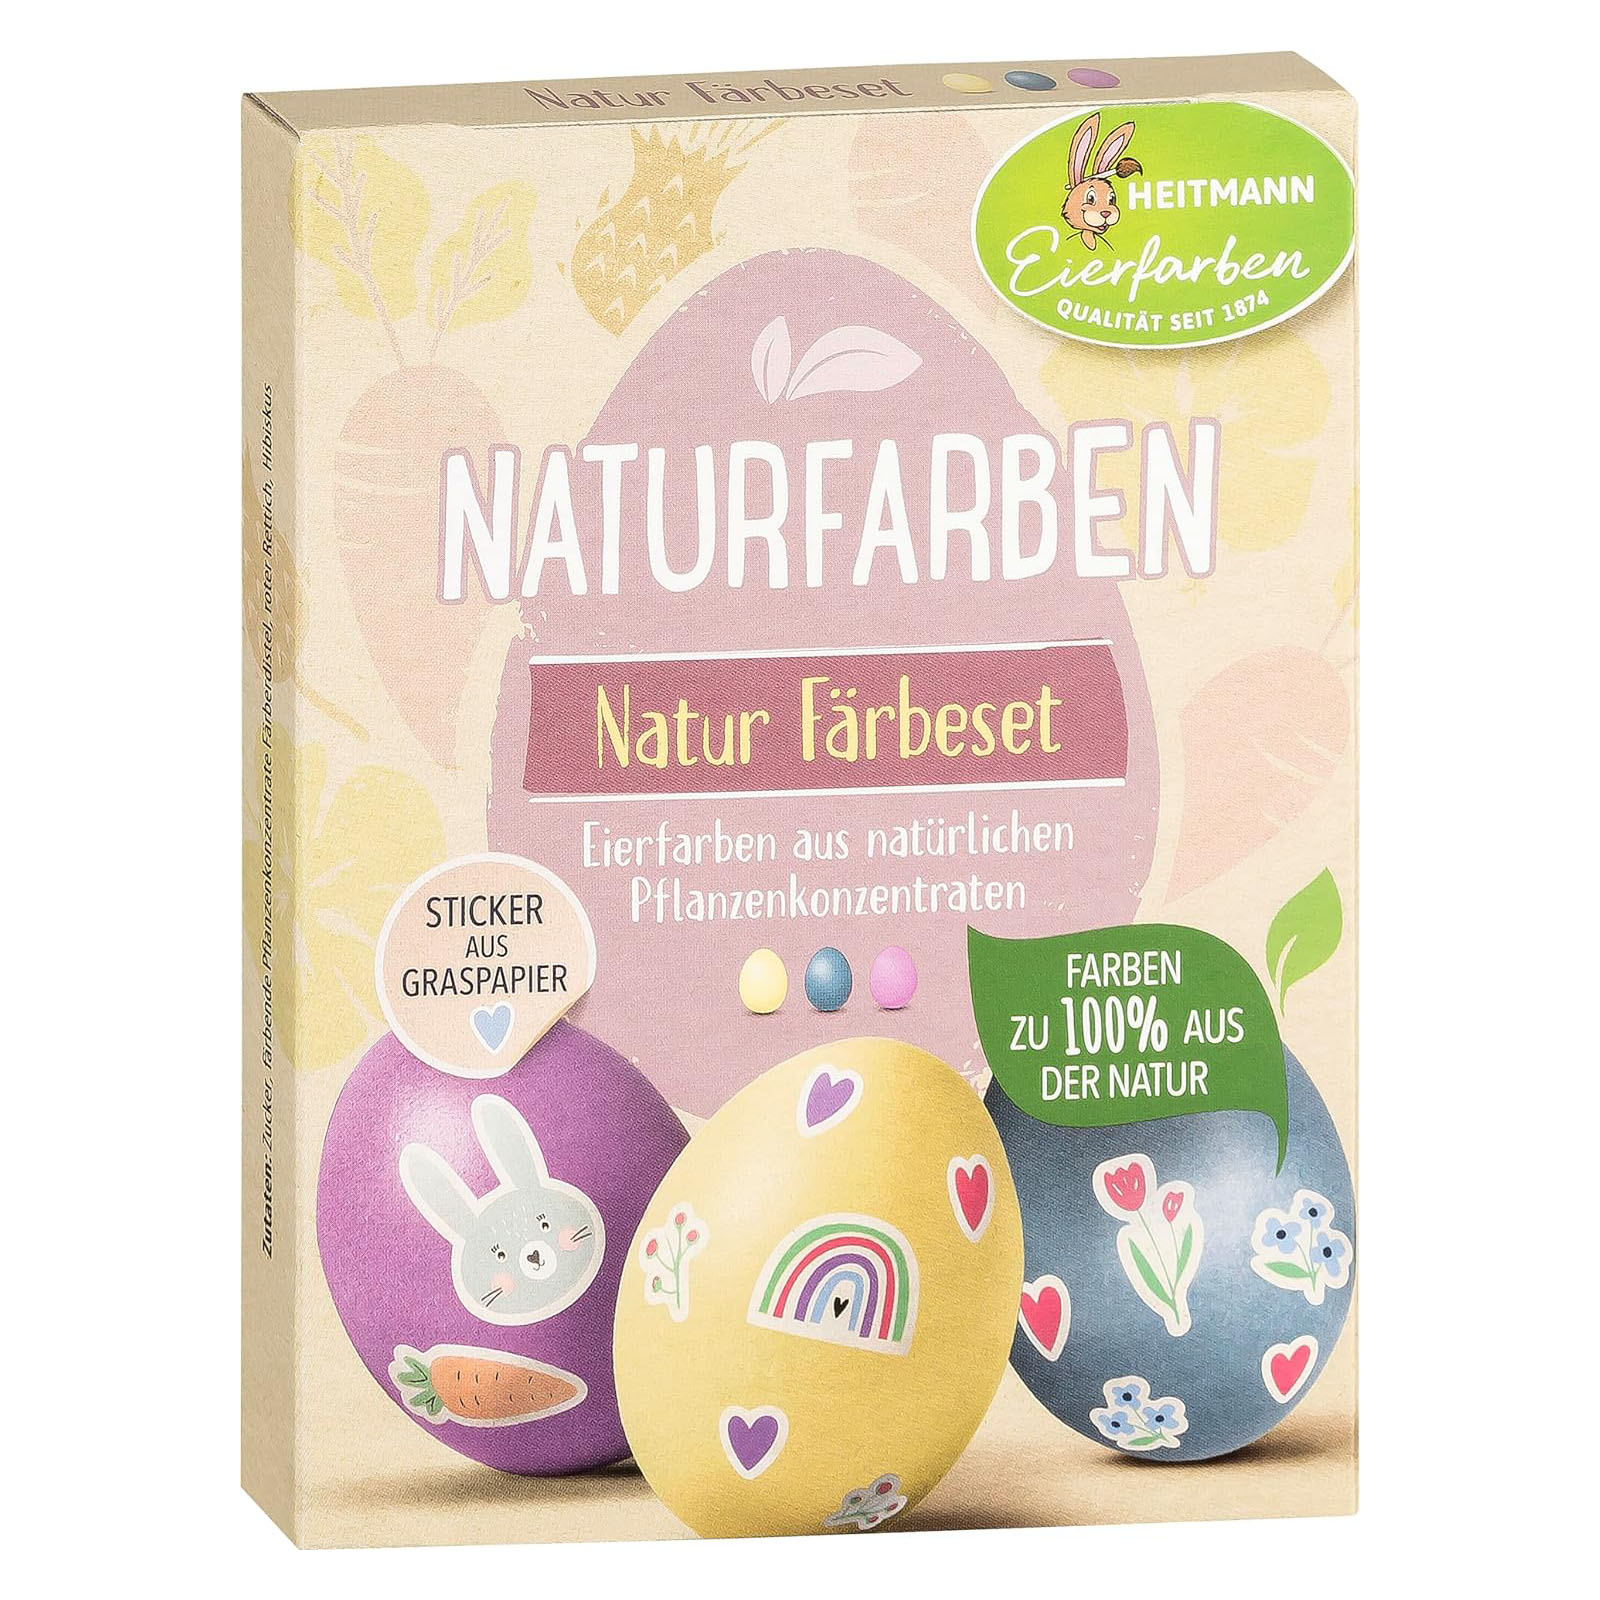 Brauns Heitmann Natur Frbeset Eierfarbe Kalt